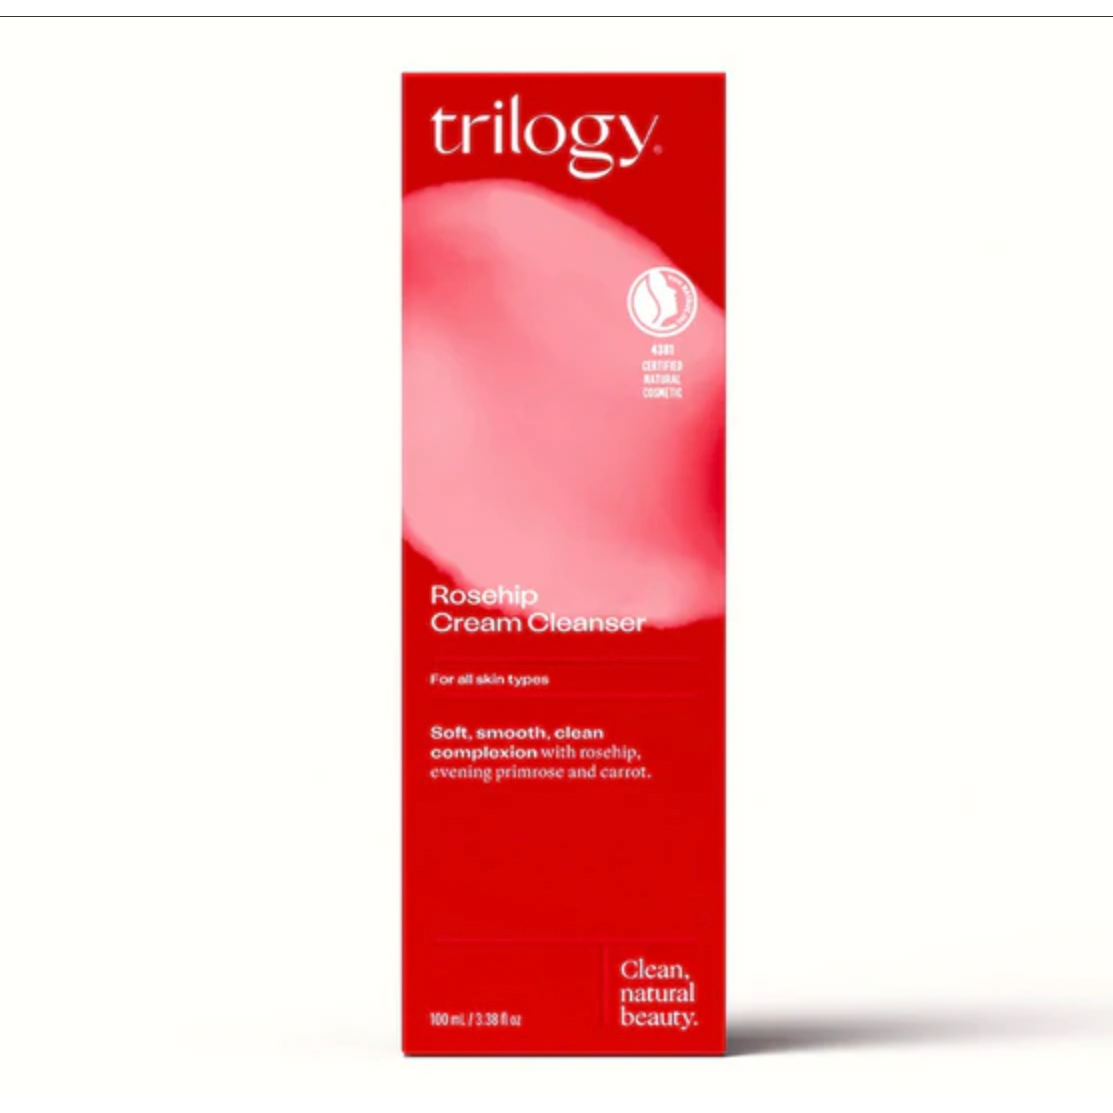 Trilogy Rosehip Cream Cleanser (100ml)